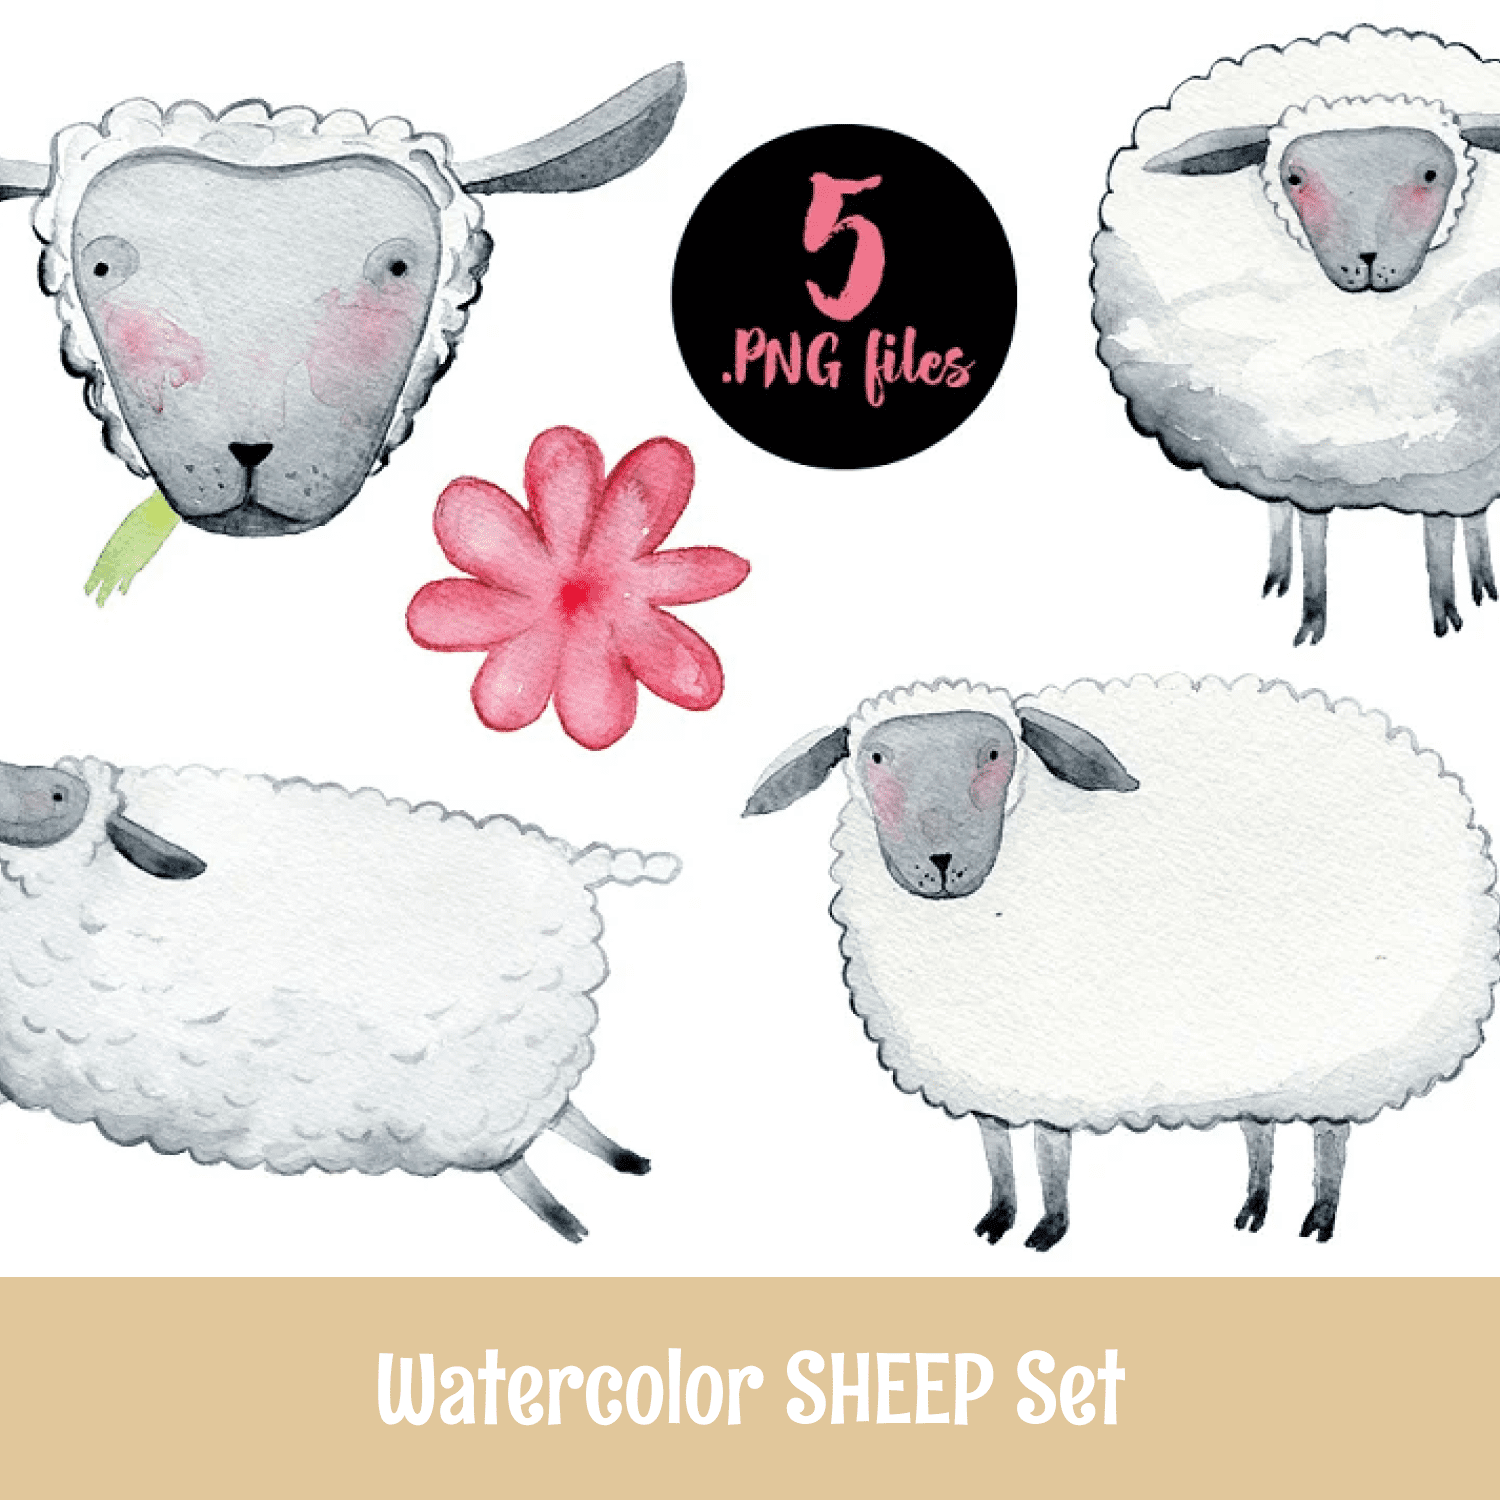 Watercolor SHEEP Set cover.